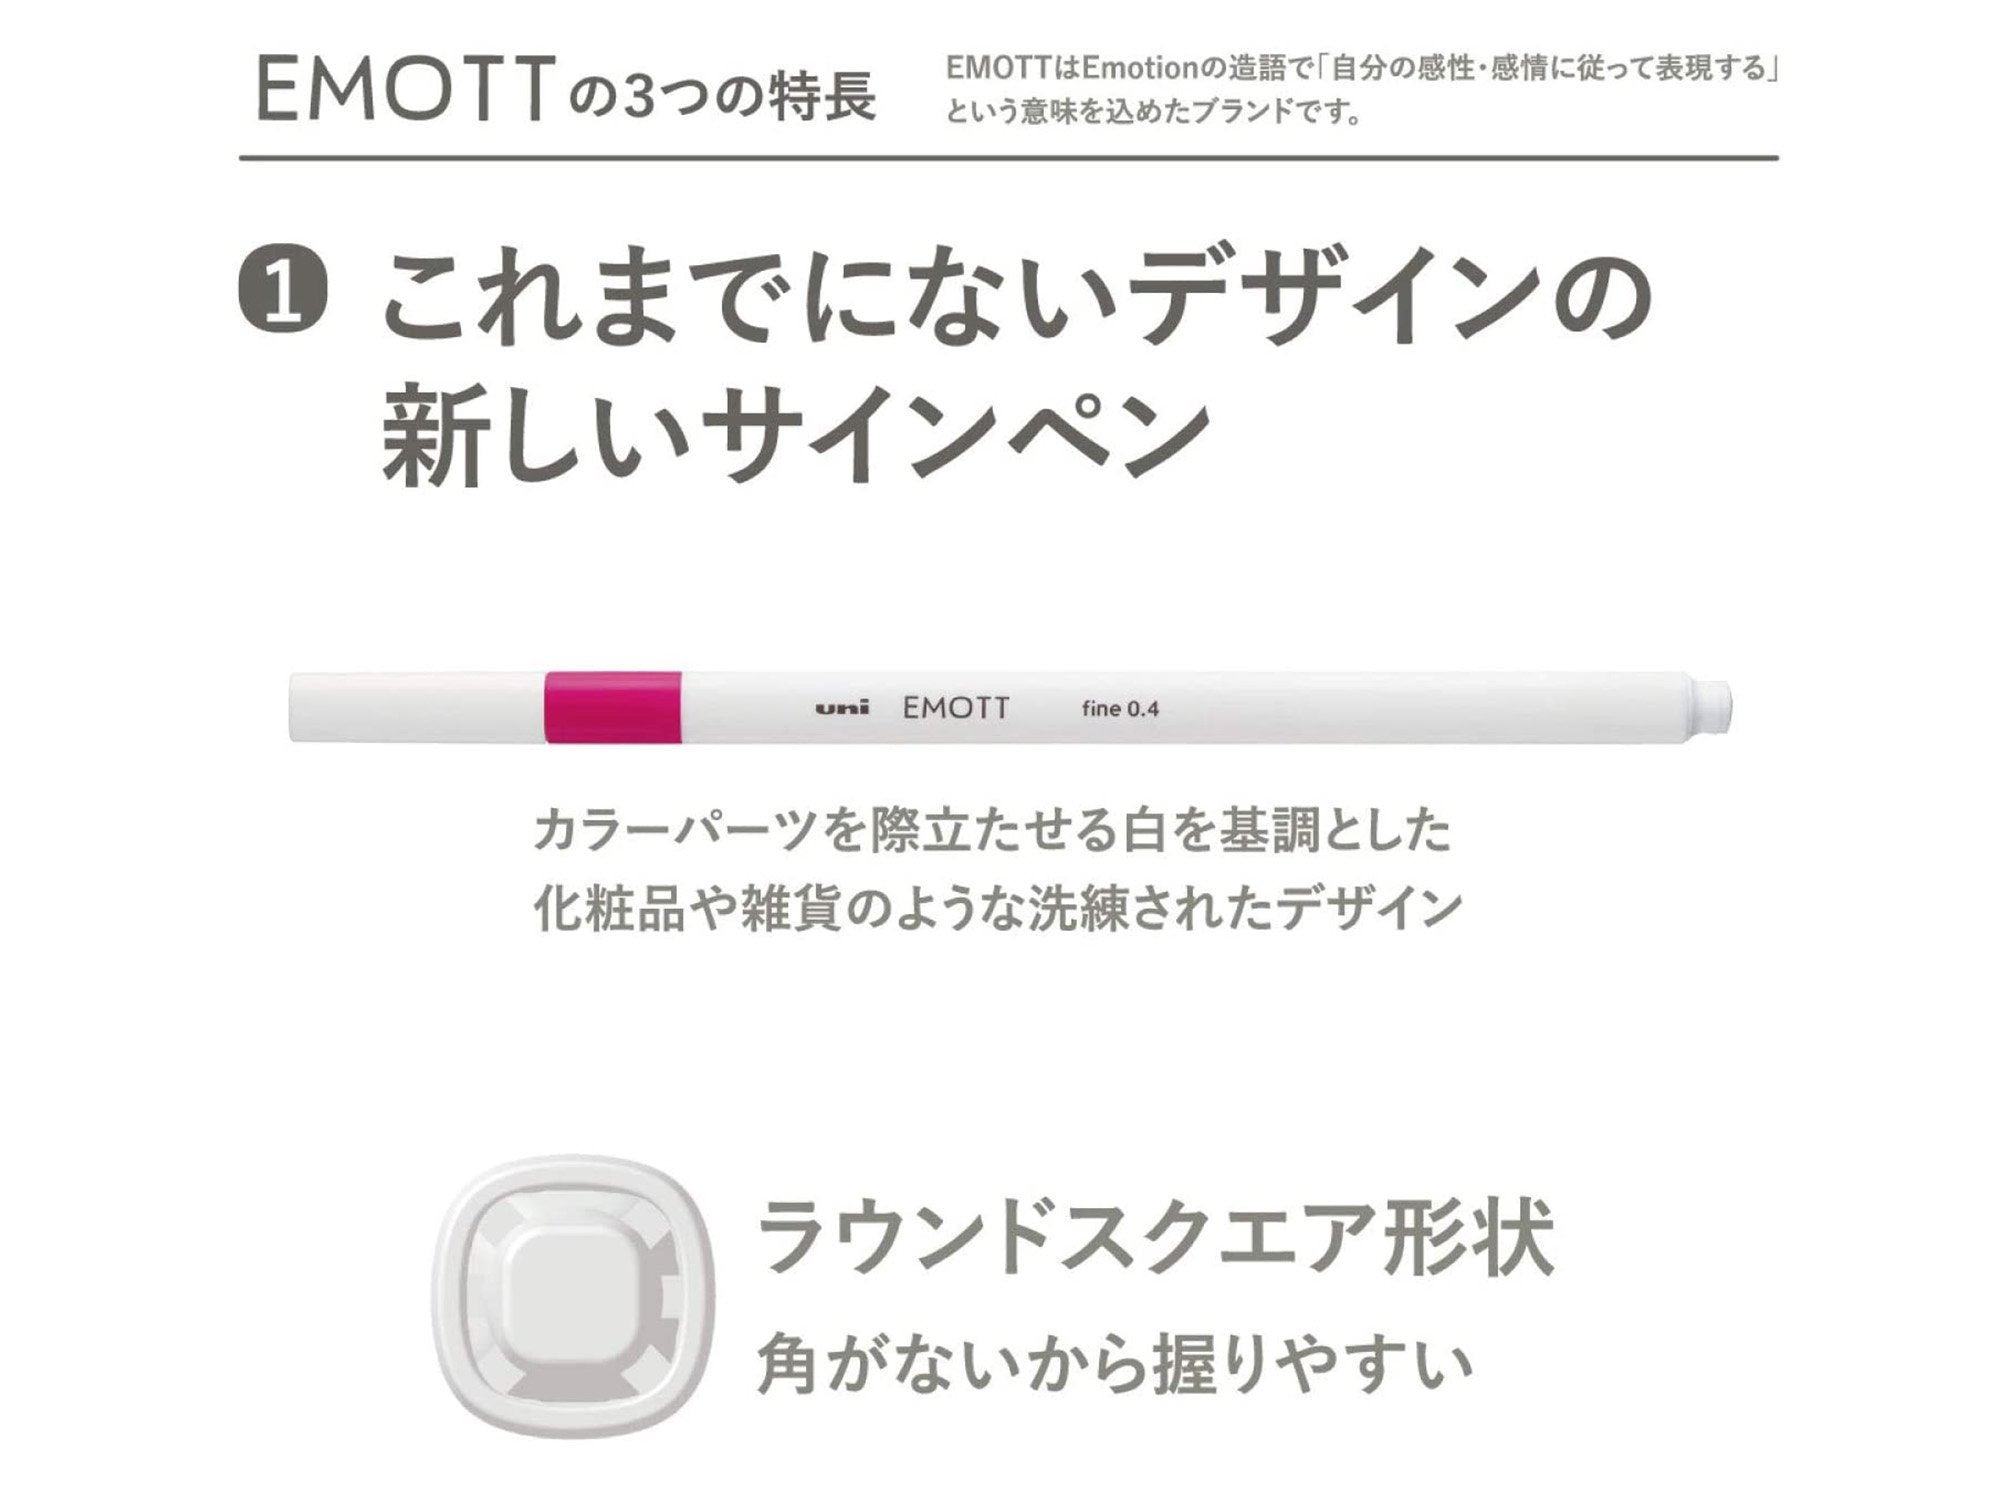 Emott 0.4mm Fineliner 10-Pen Set #2